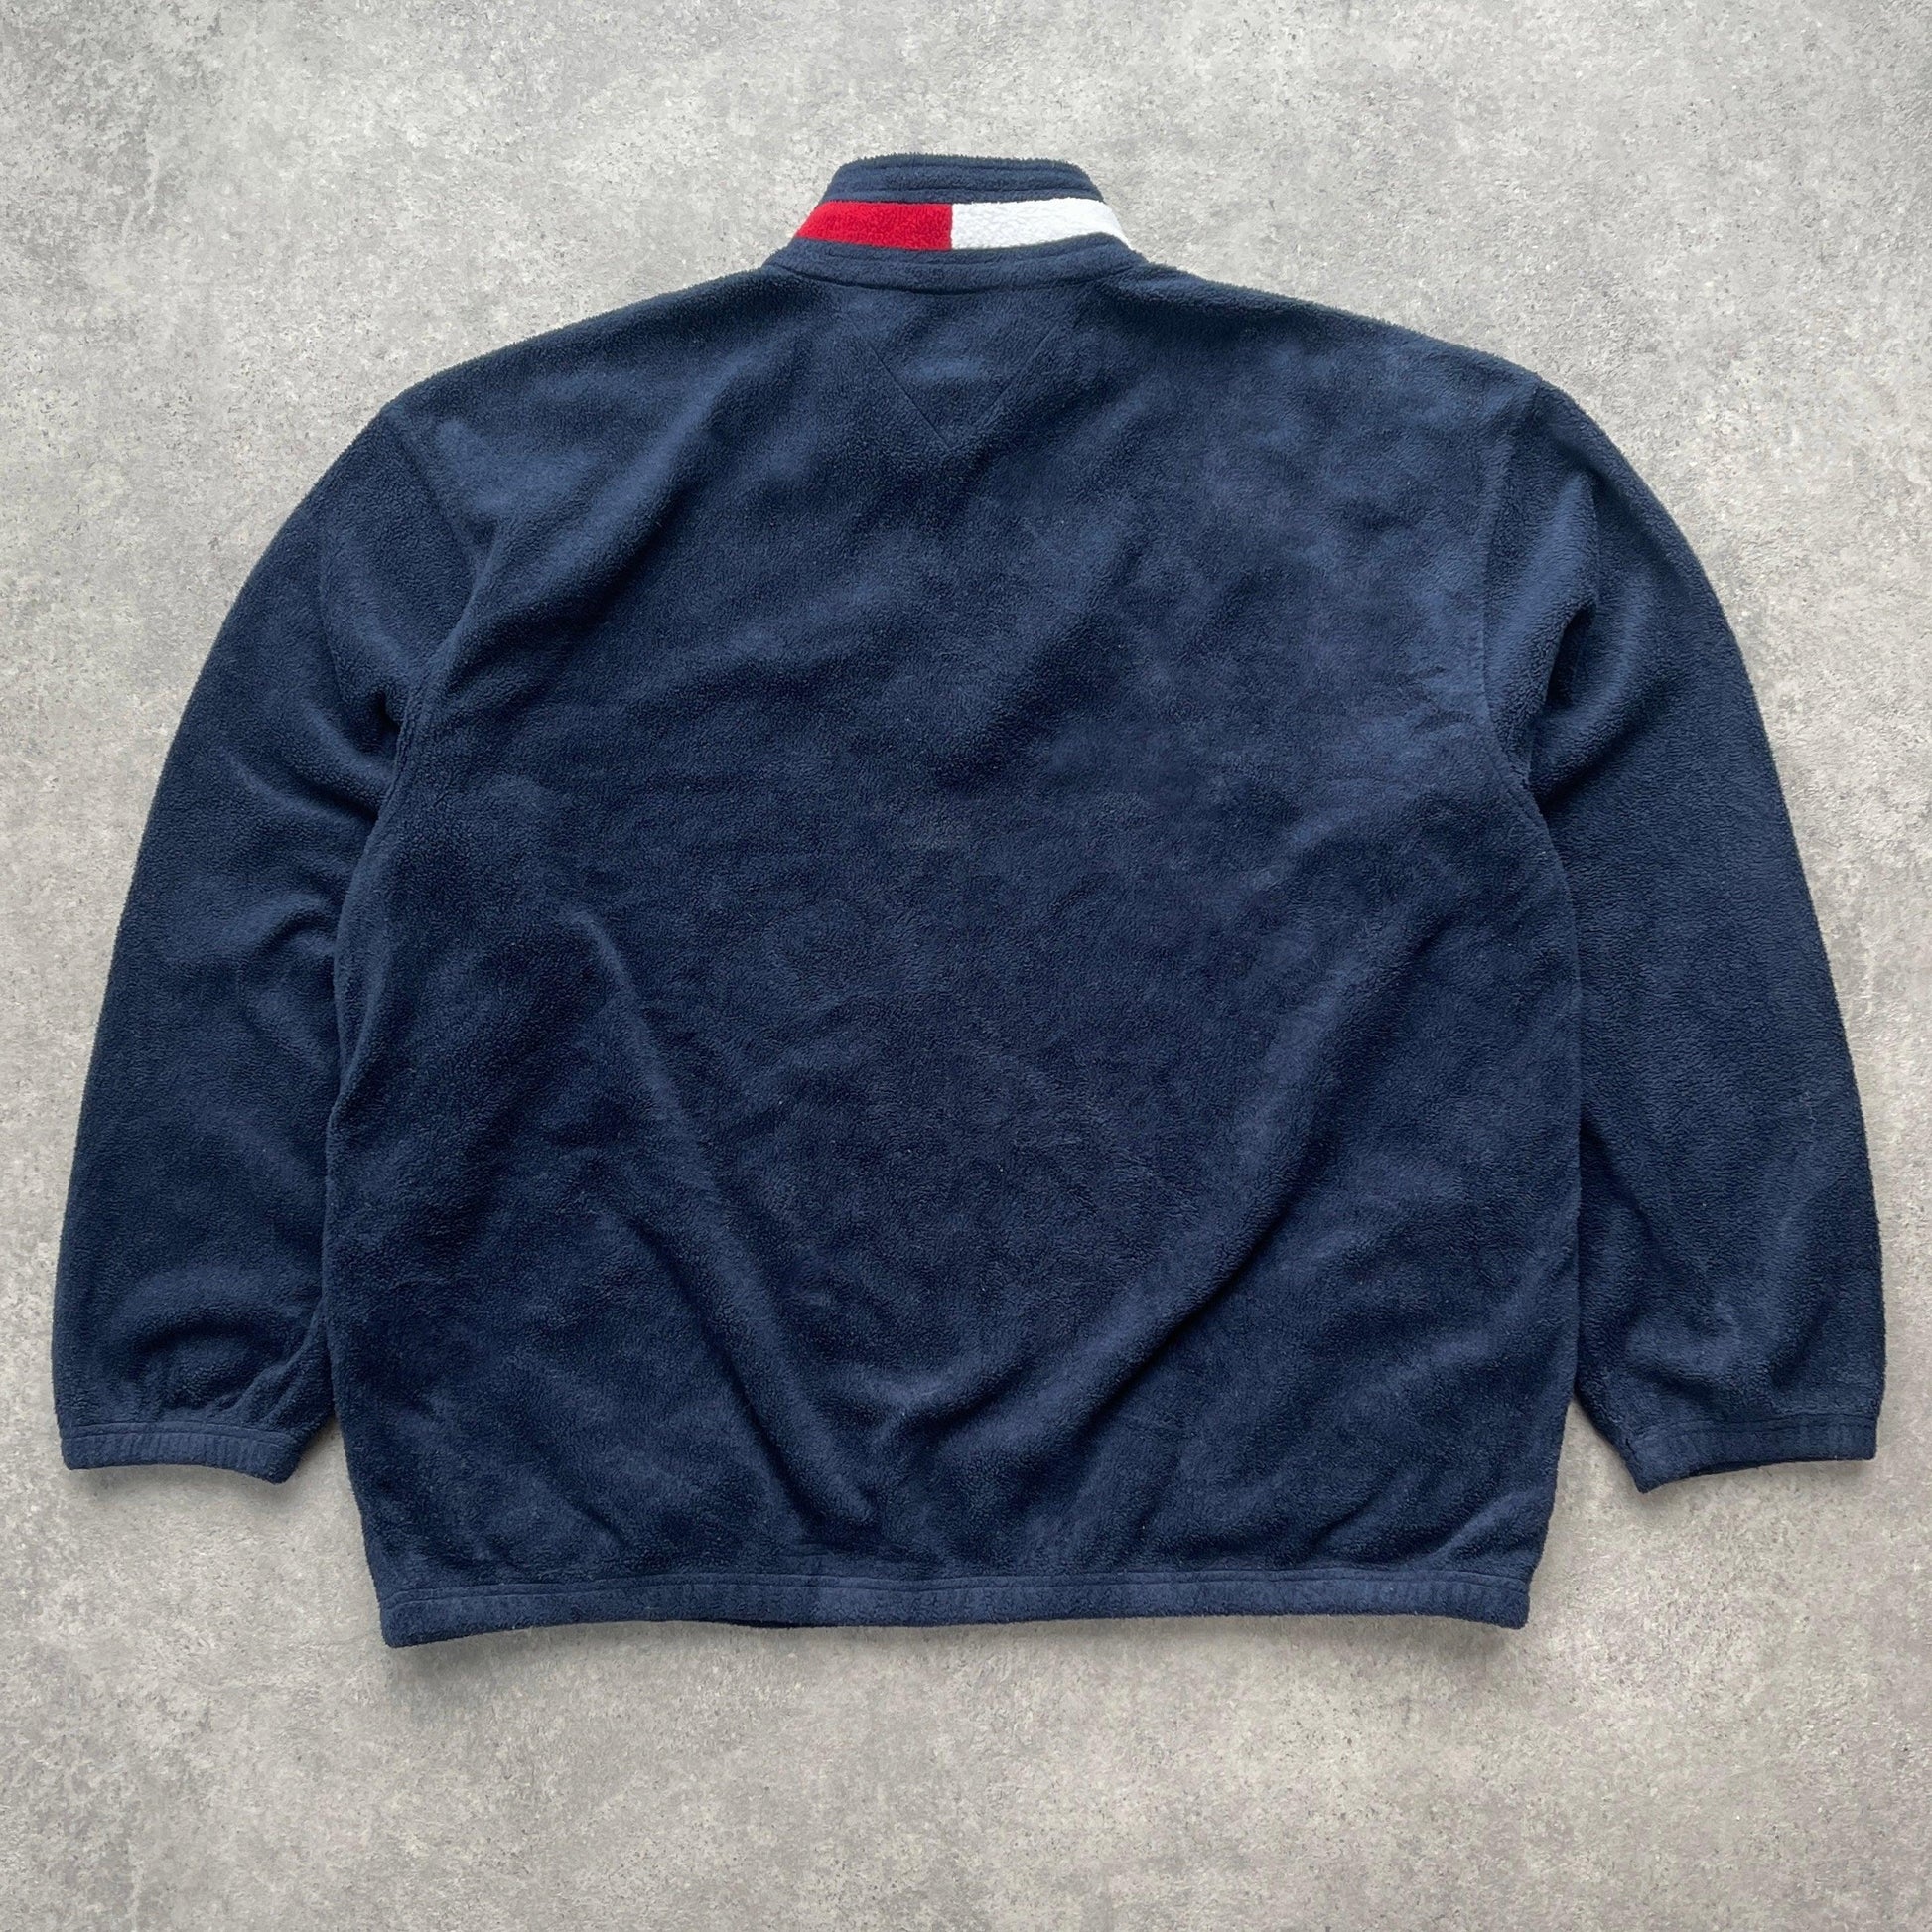 Tommy Hilfiger 1990s 1/4 zip heavyweight fleece jacket (L) - Known Source